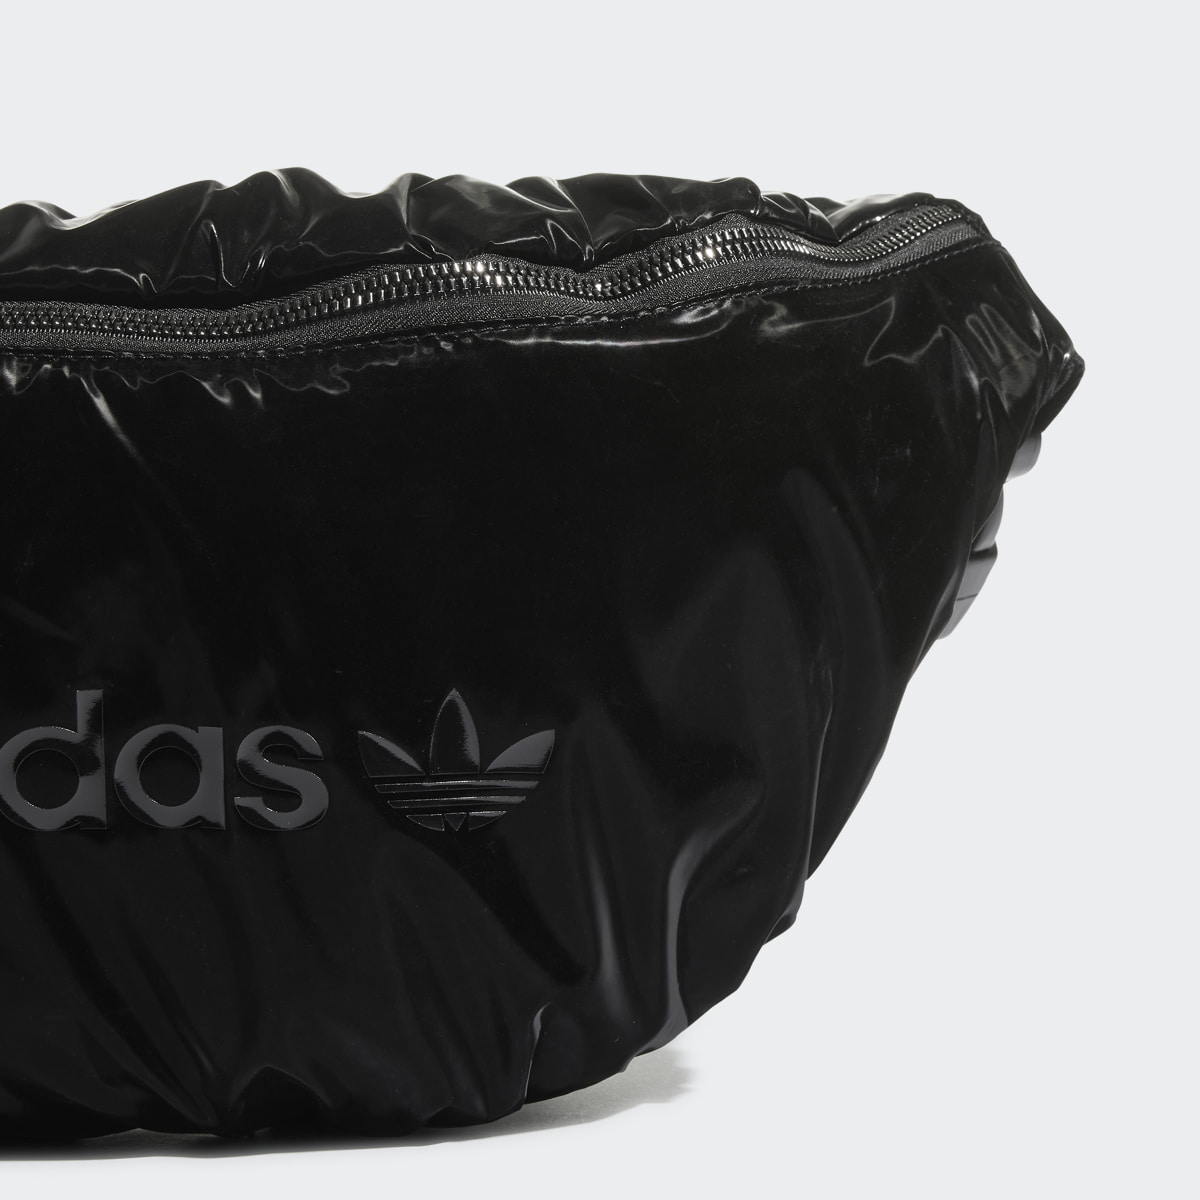 Adidas Waist Bag. 6